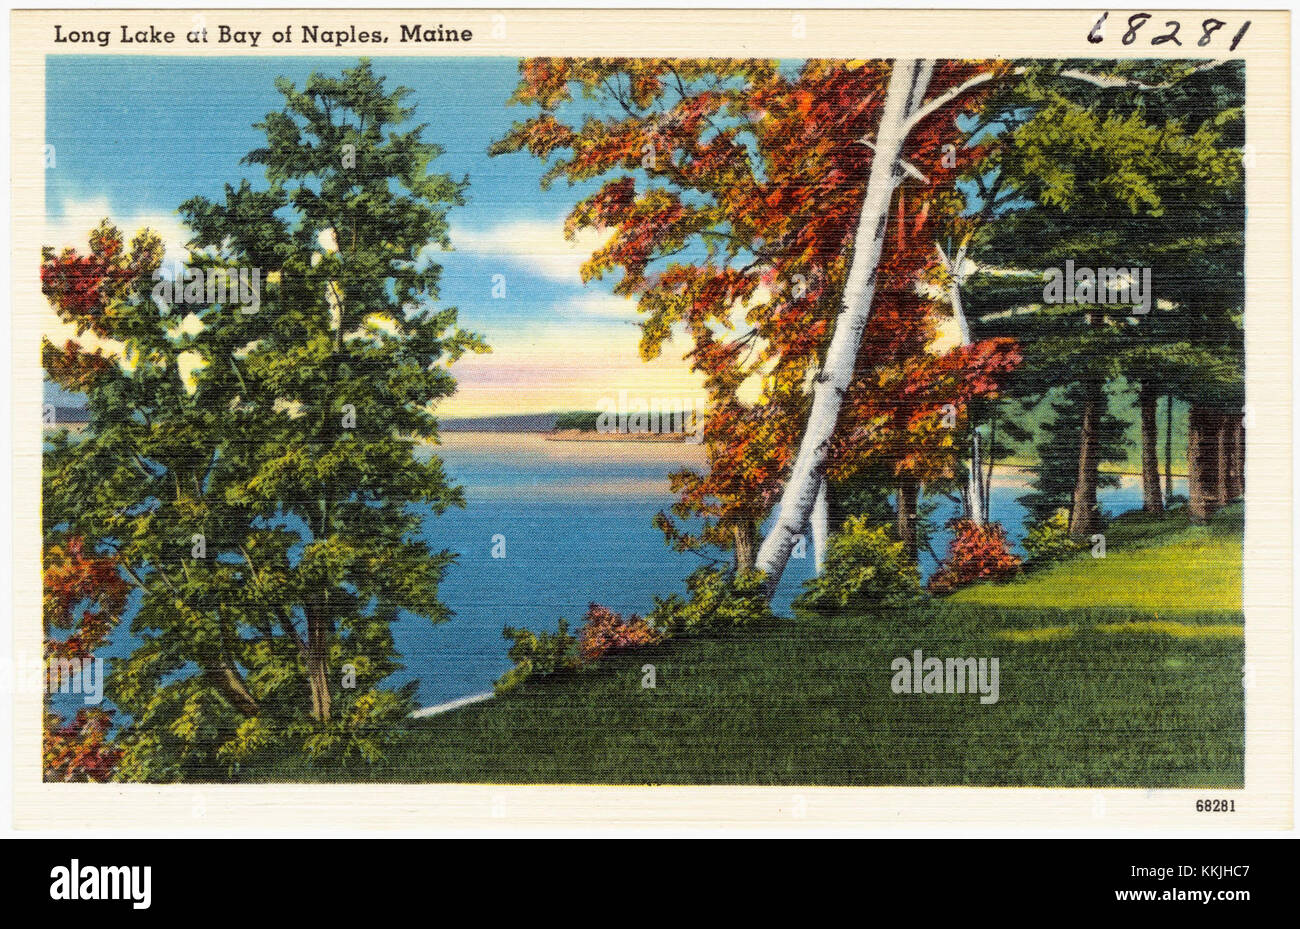 Long Lake at Bay of Naples, Maine (68281) Stock Photo